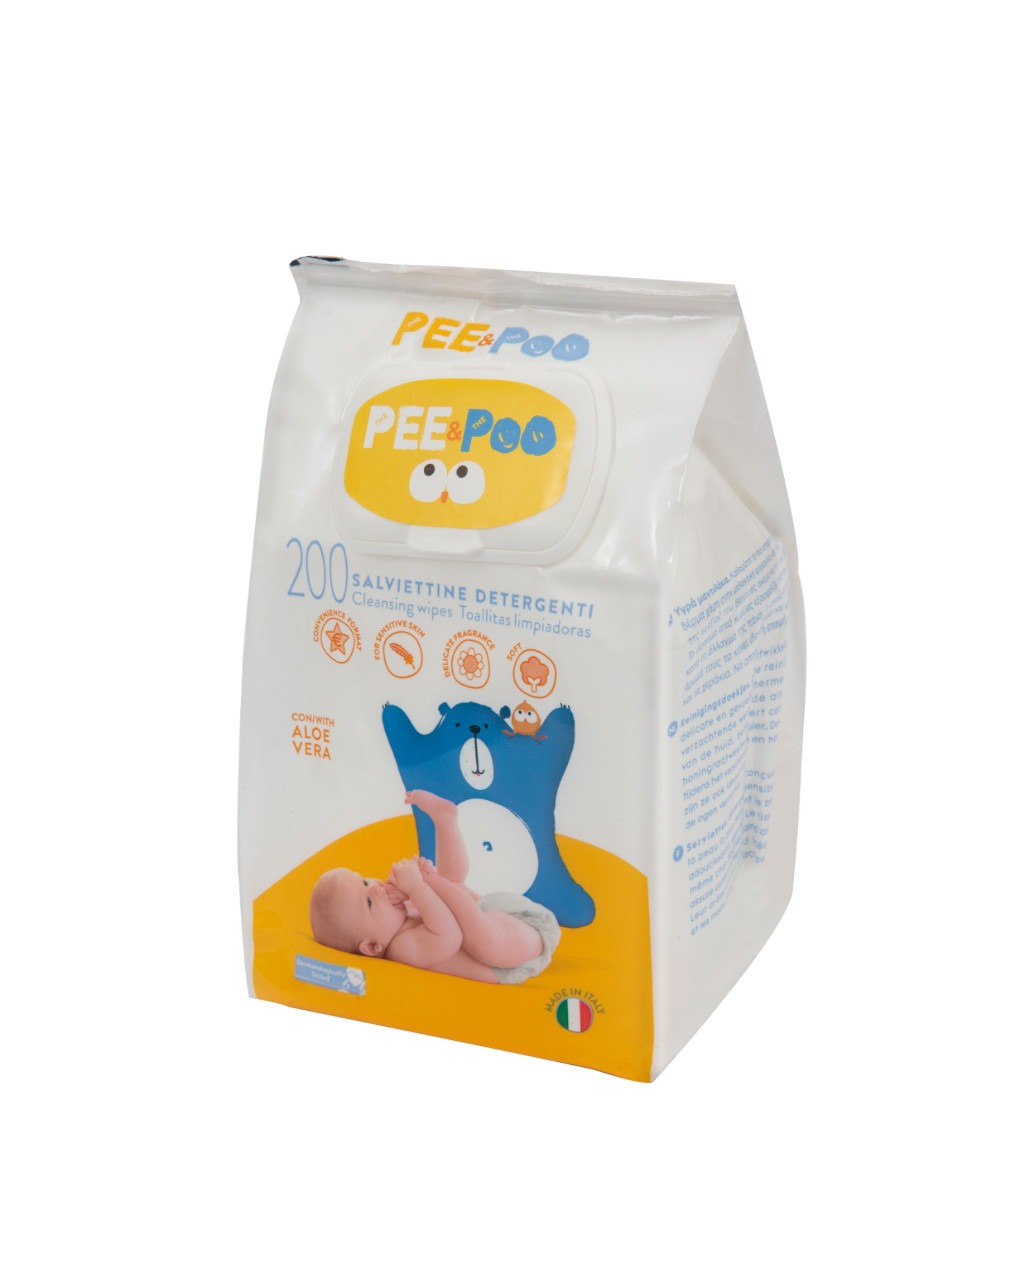 Pee&amp;poo - salviettine detergenti 200 pz - PEE&amp;POO